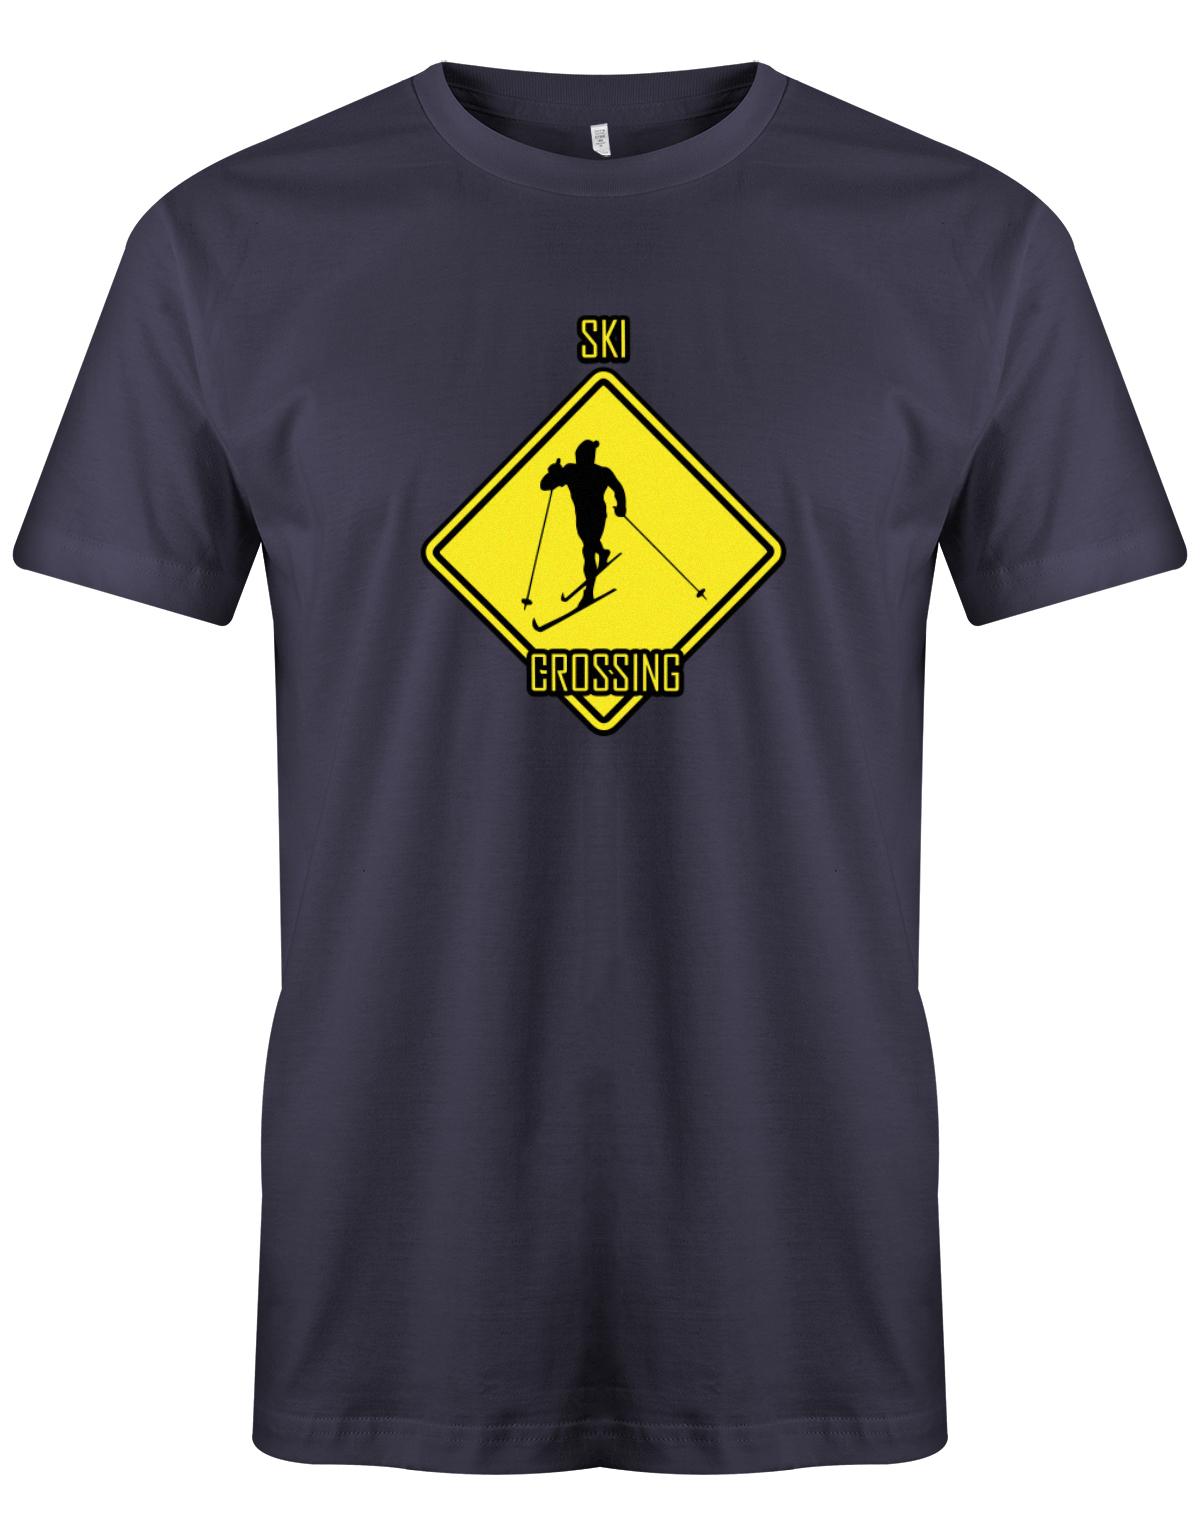 Ski-Crossing-Skier-shirt-herren-navy